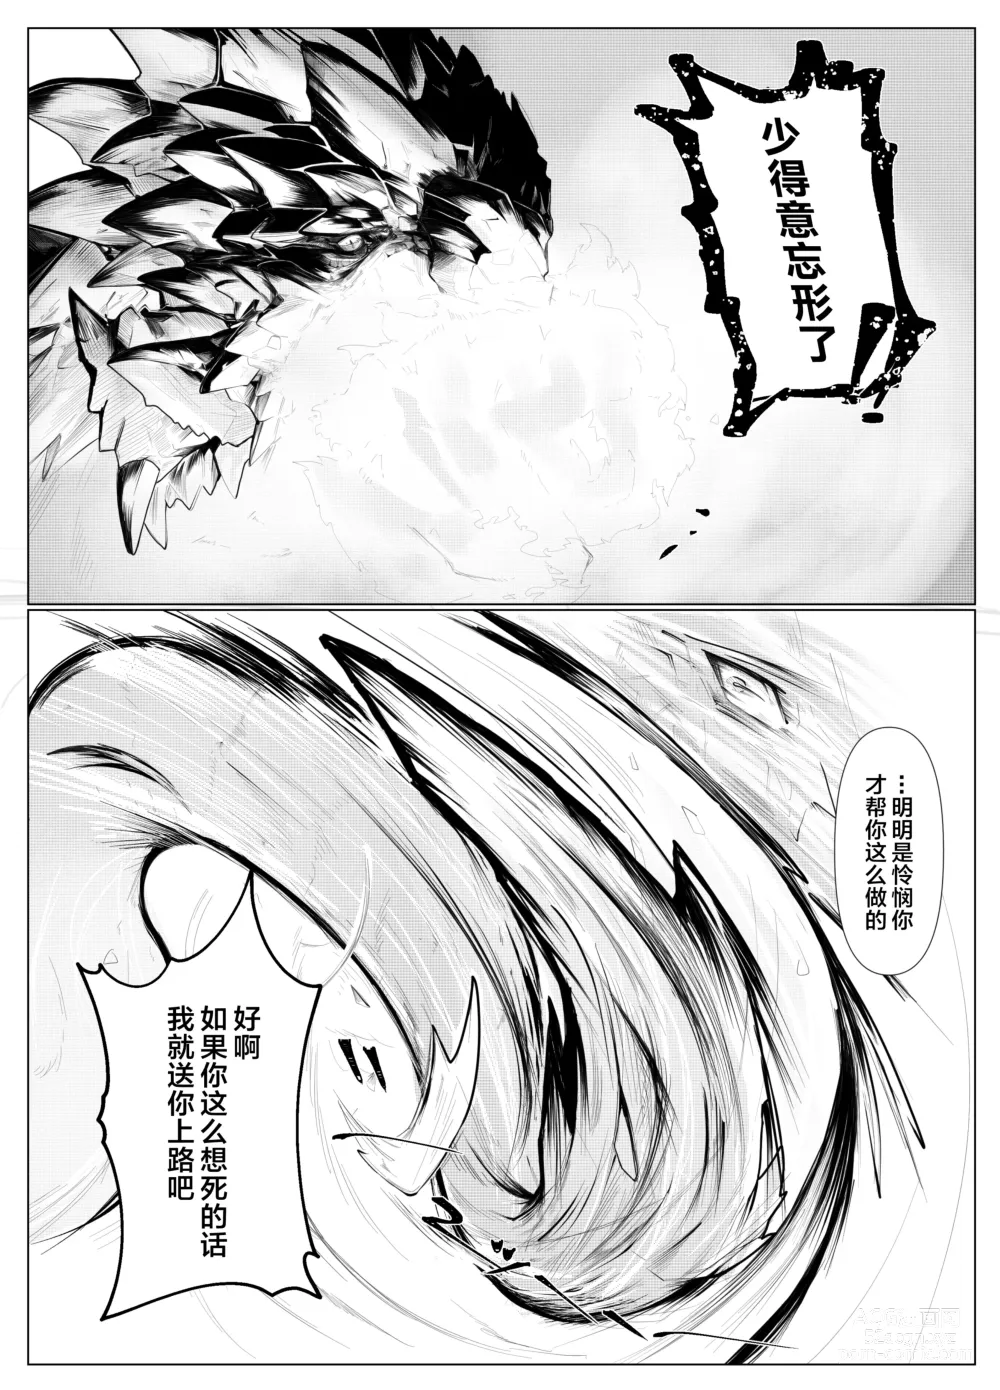 Page 13 of doujinshi 玉響